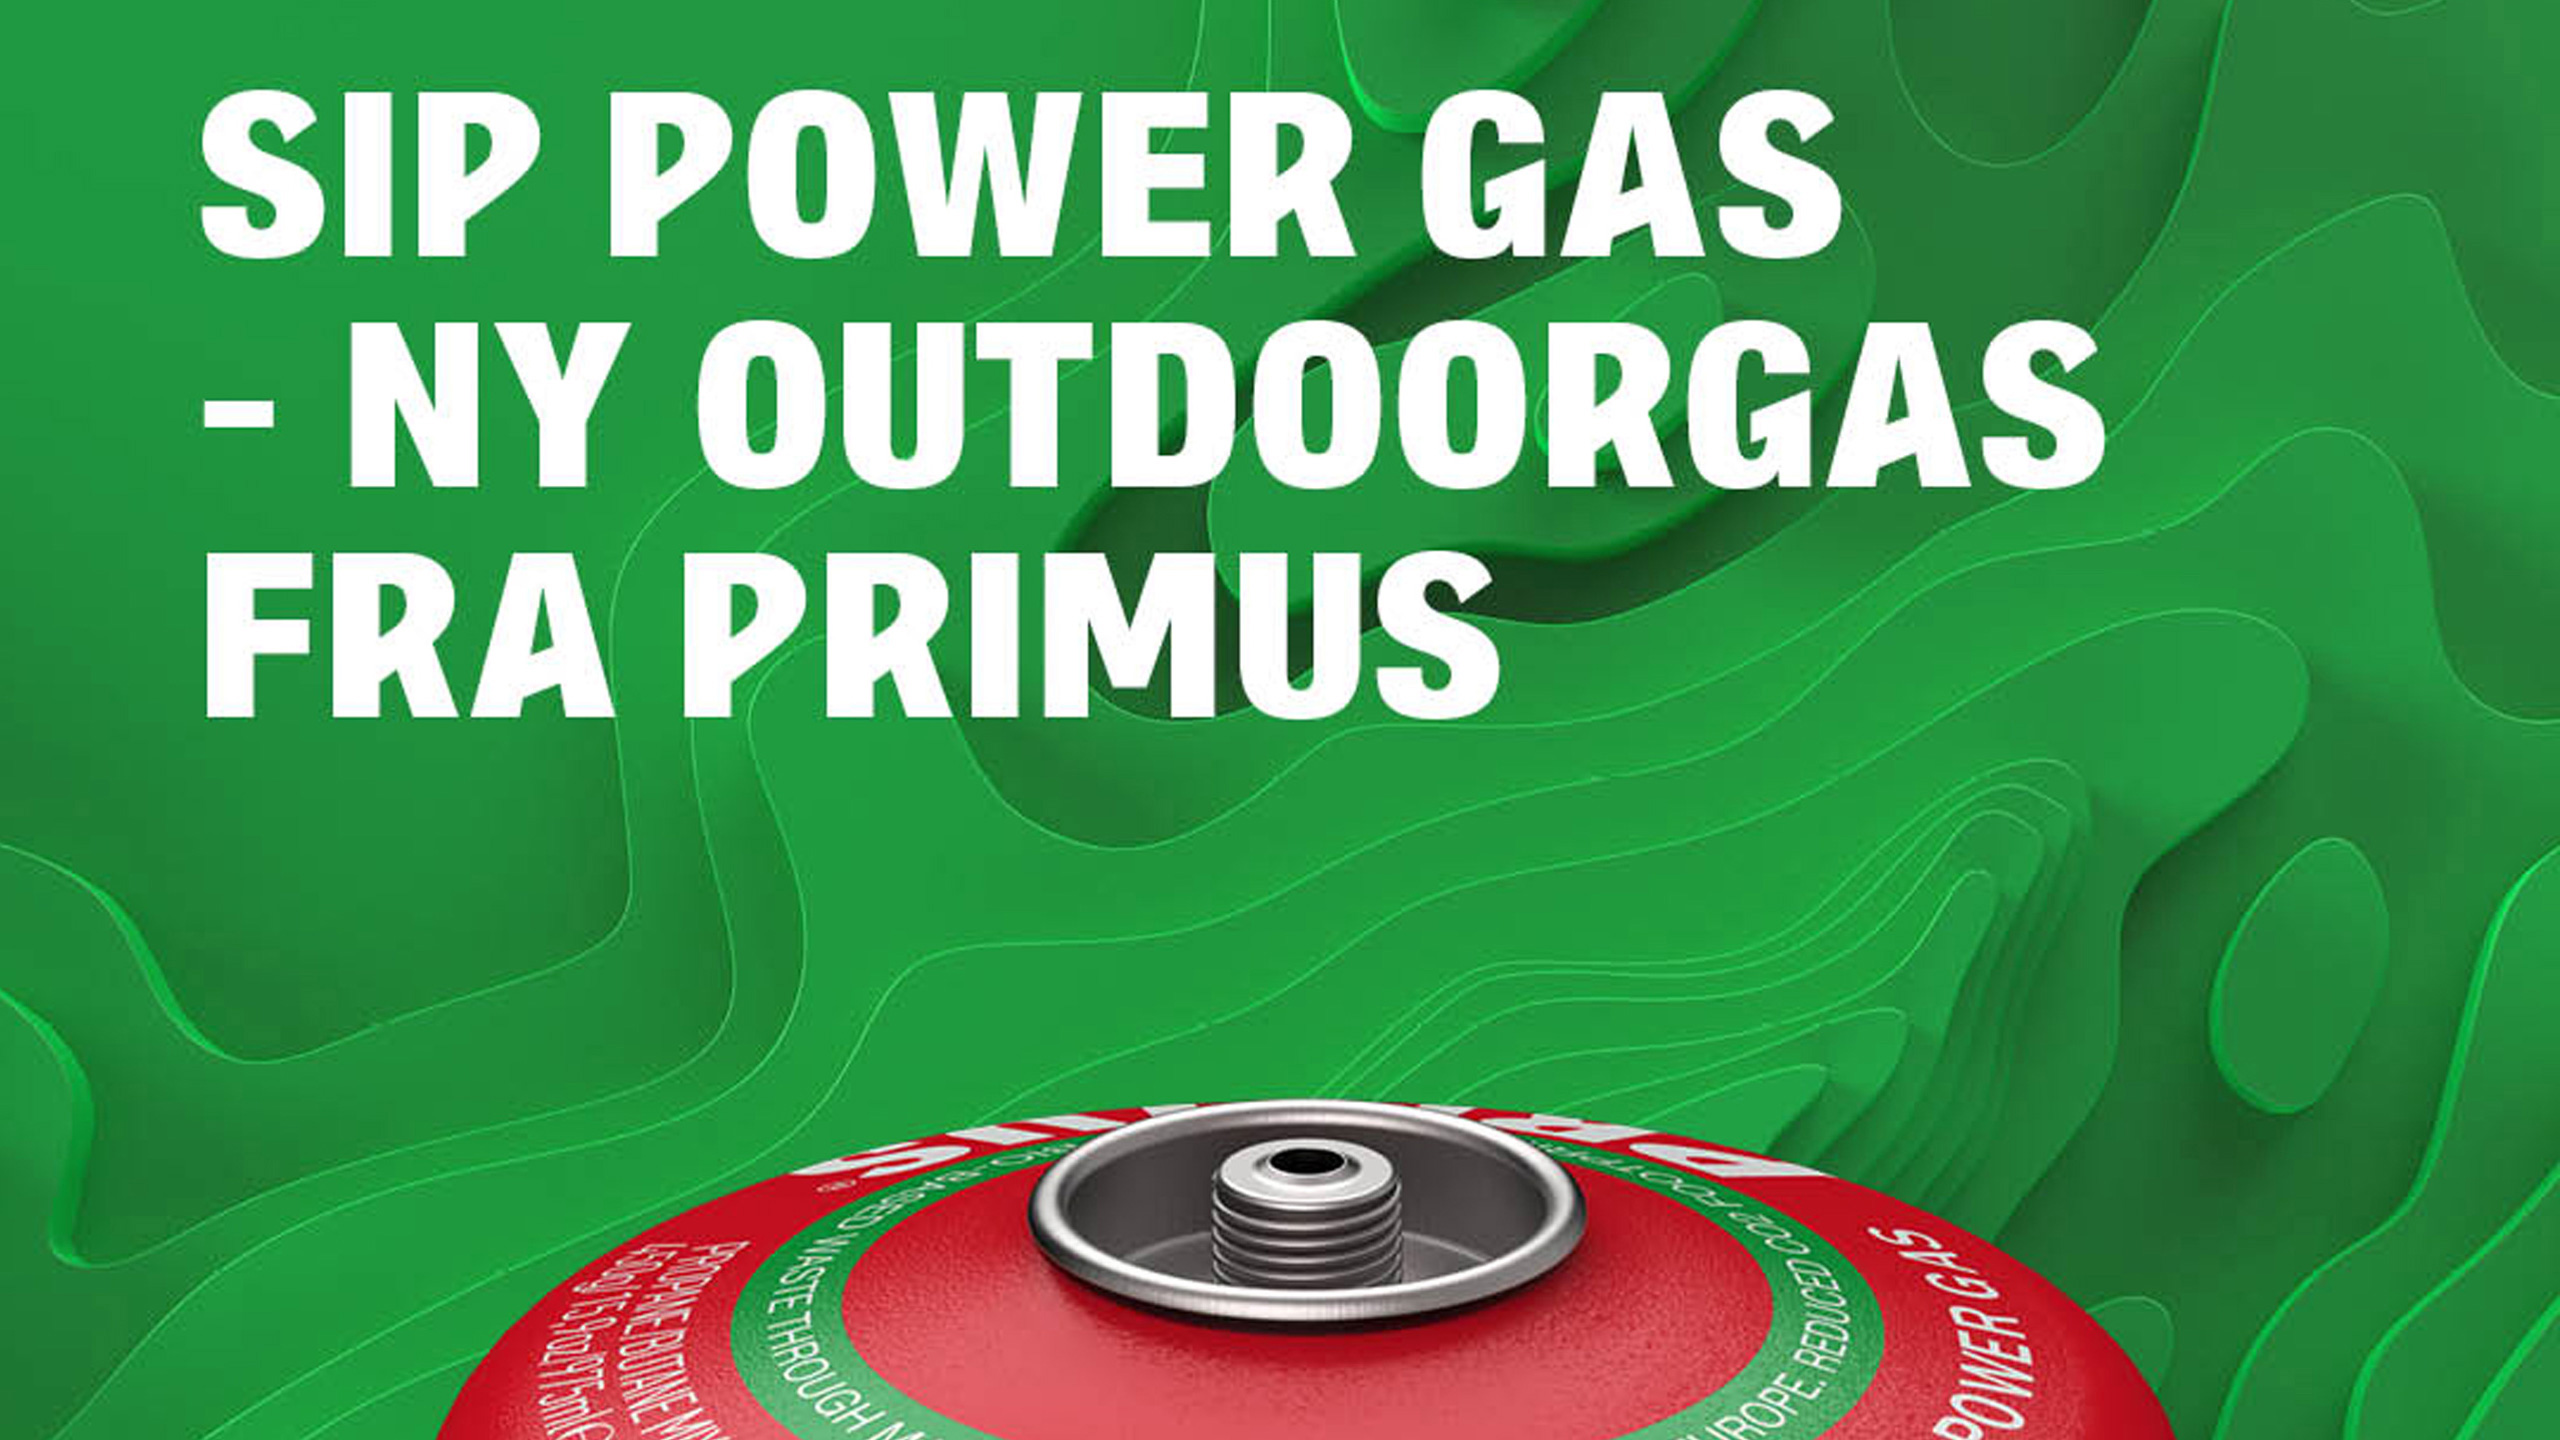 Primus SIP Power gas